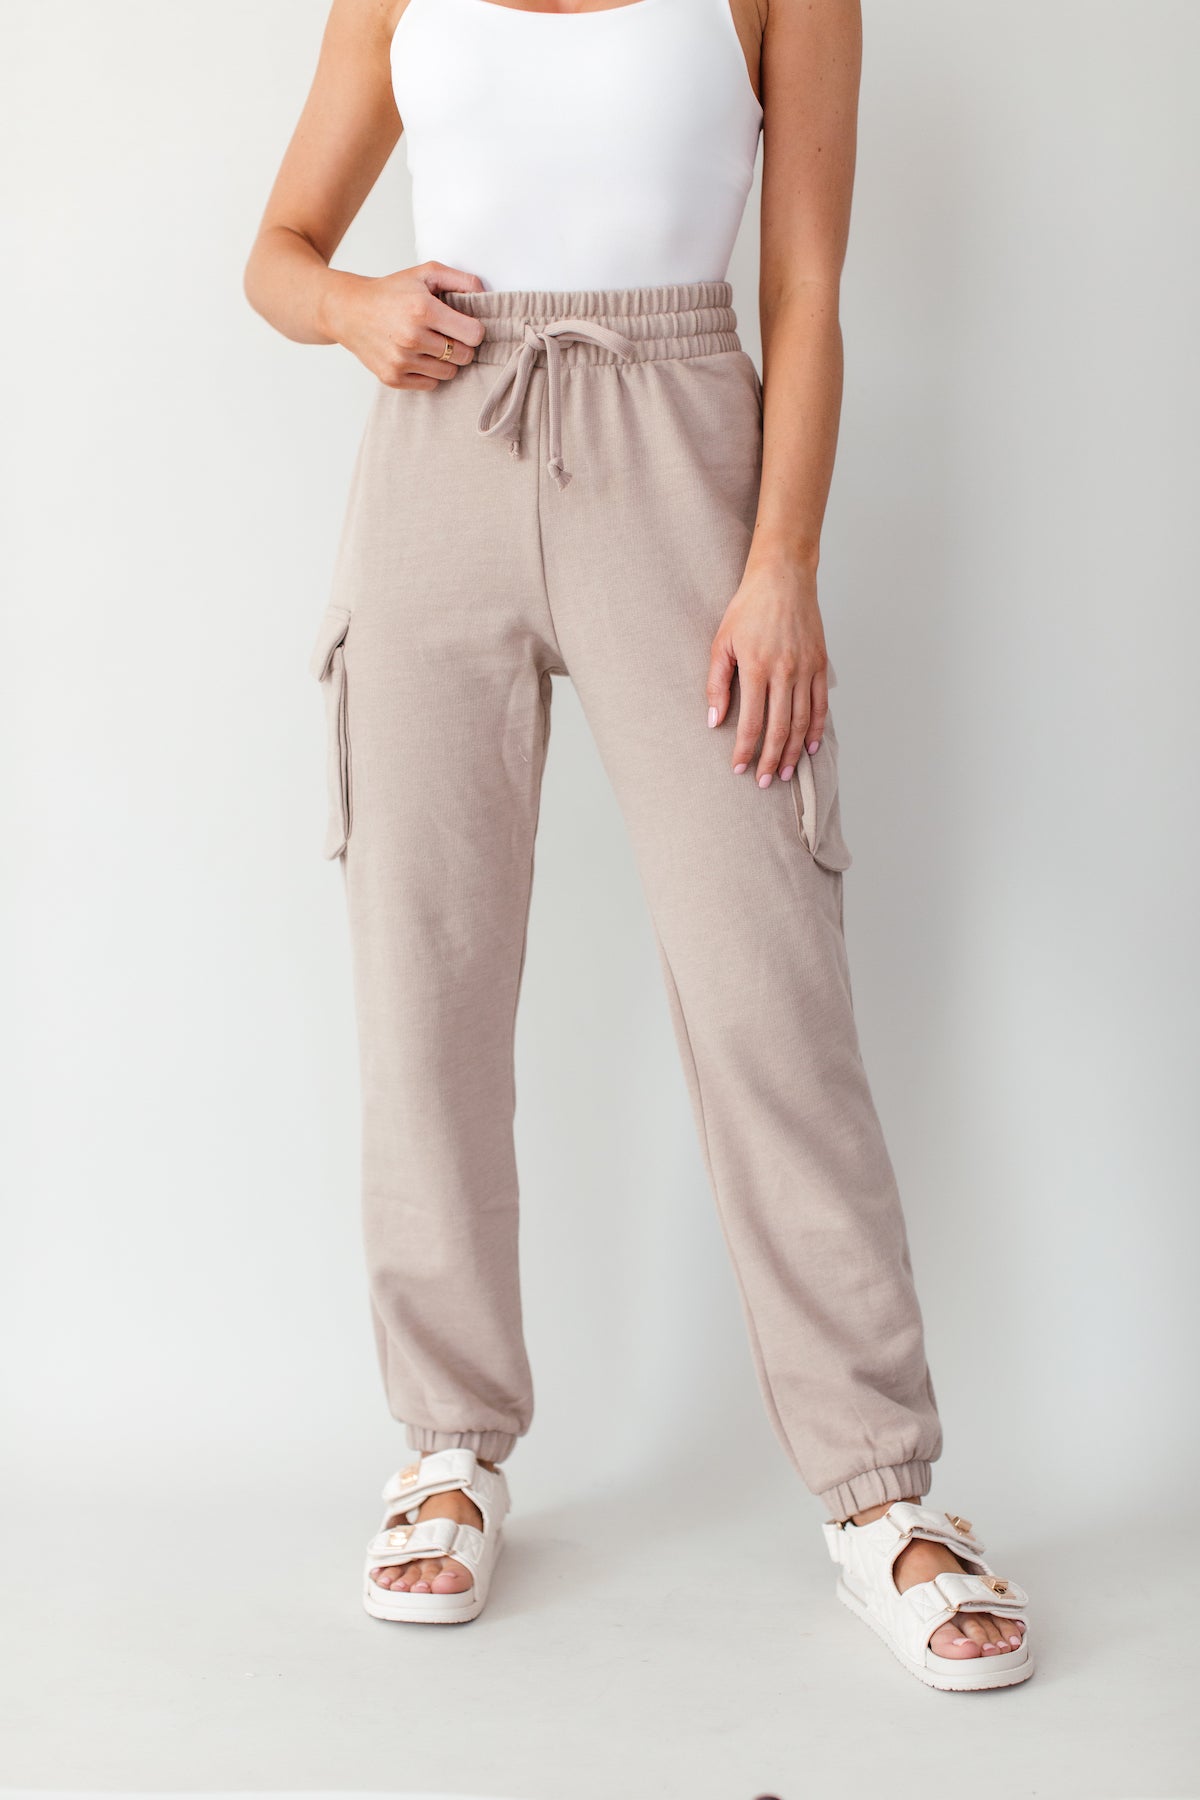 Dakota Taupe Sweatpants, alternate, color, Tan